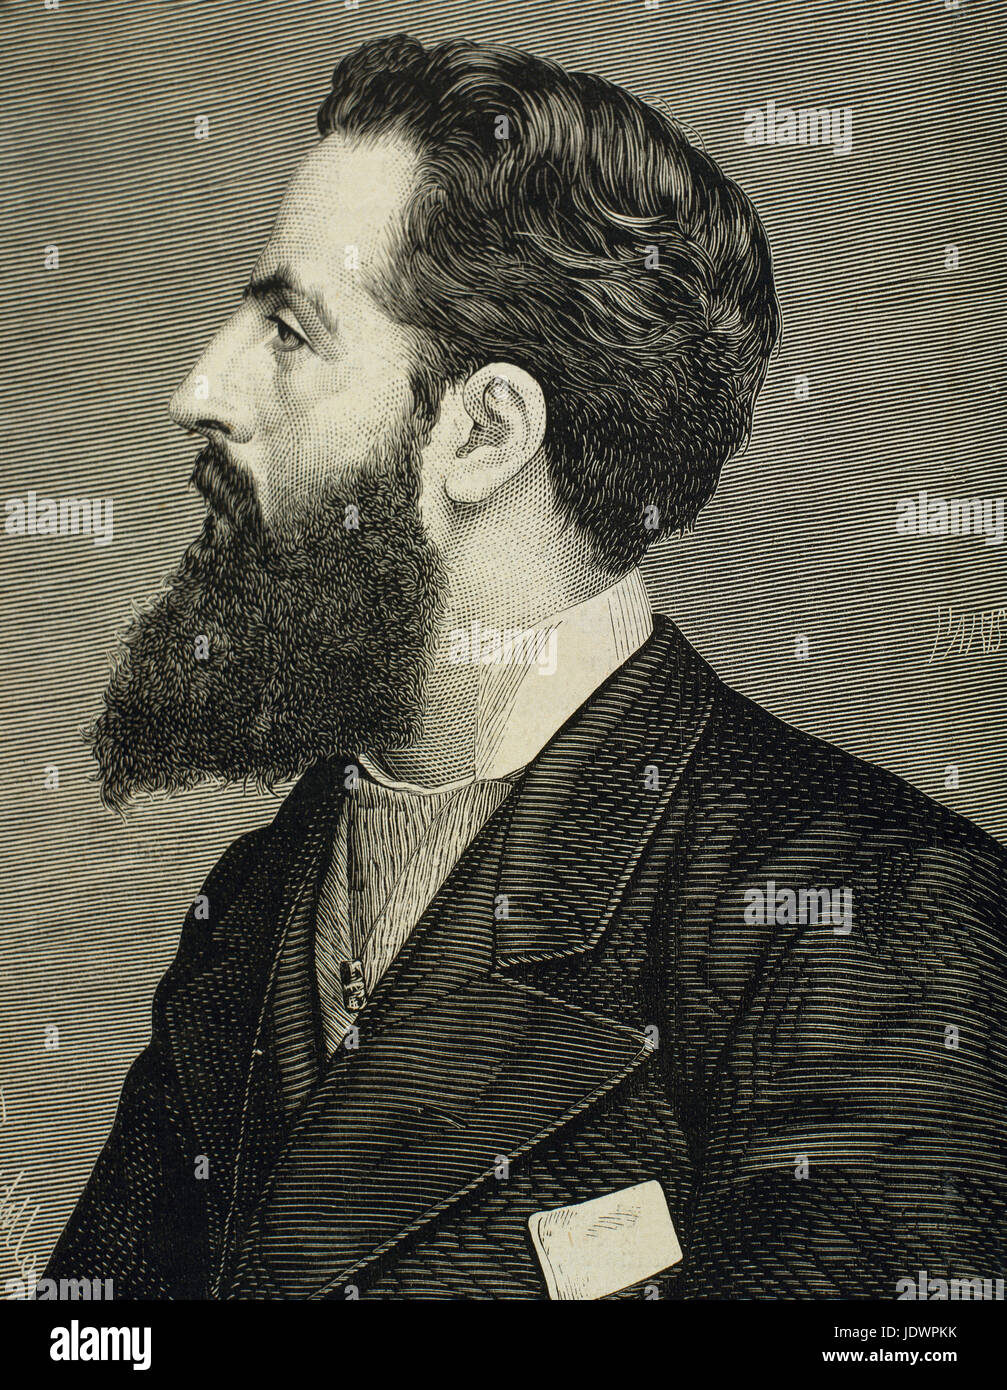 Alejandro Pidal y Mo (1846-1913). Spanischer Politiker und Akademiker. Porträt. Kupferstich von Paris. "La Ilustracion Espanola y Americana", 1876. Stockfoto